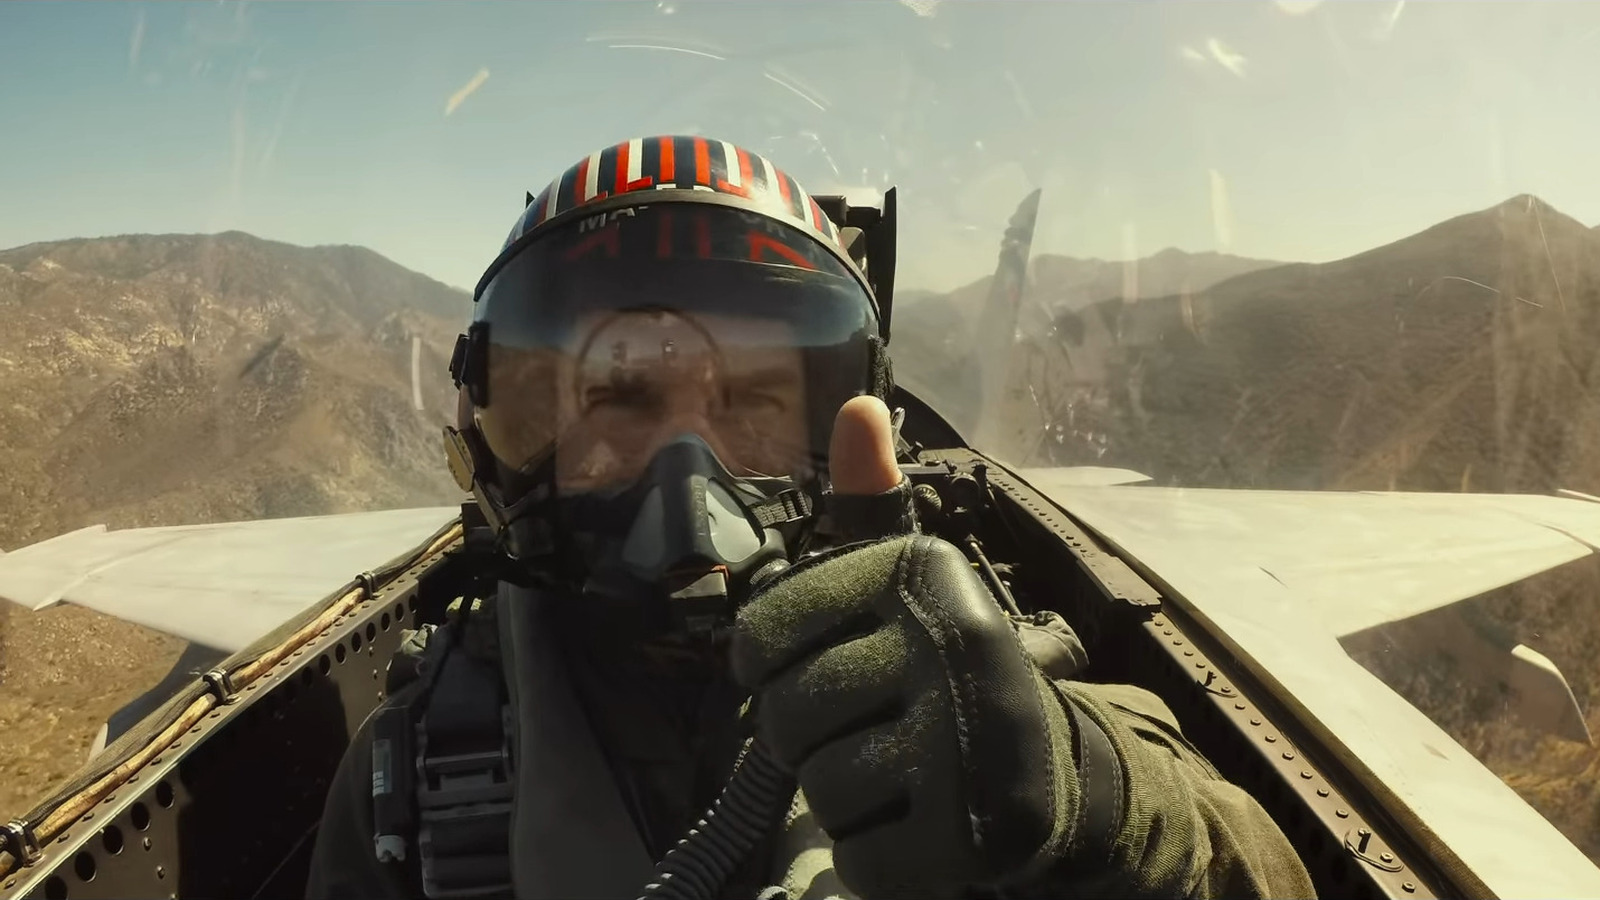 Film 'Top Gun: Maverick' Nyaris Sempurna Tanpa Celah